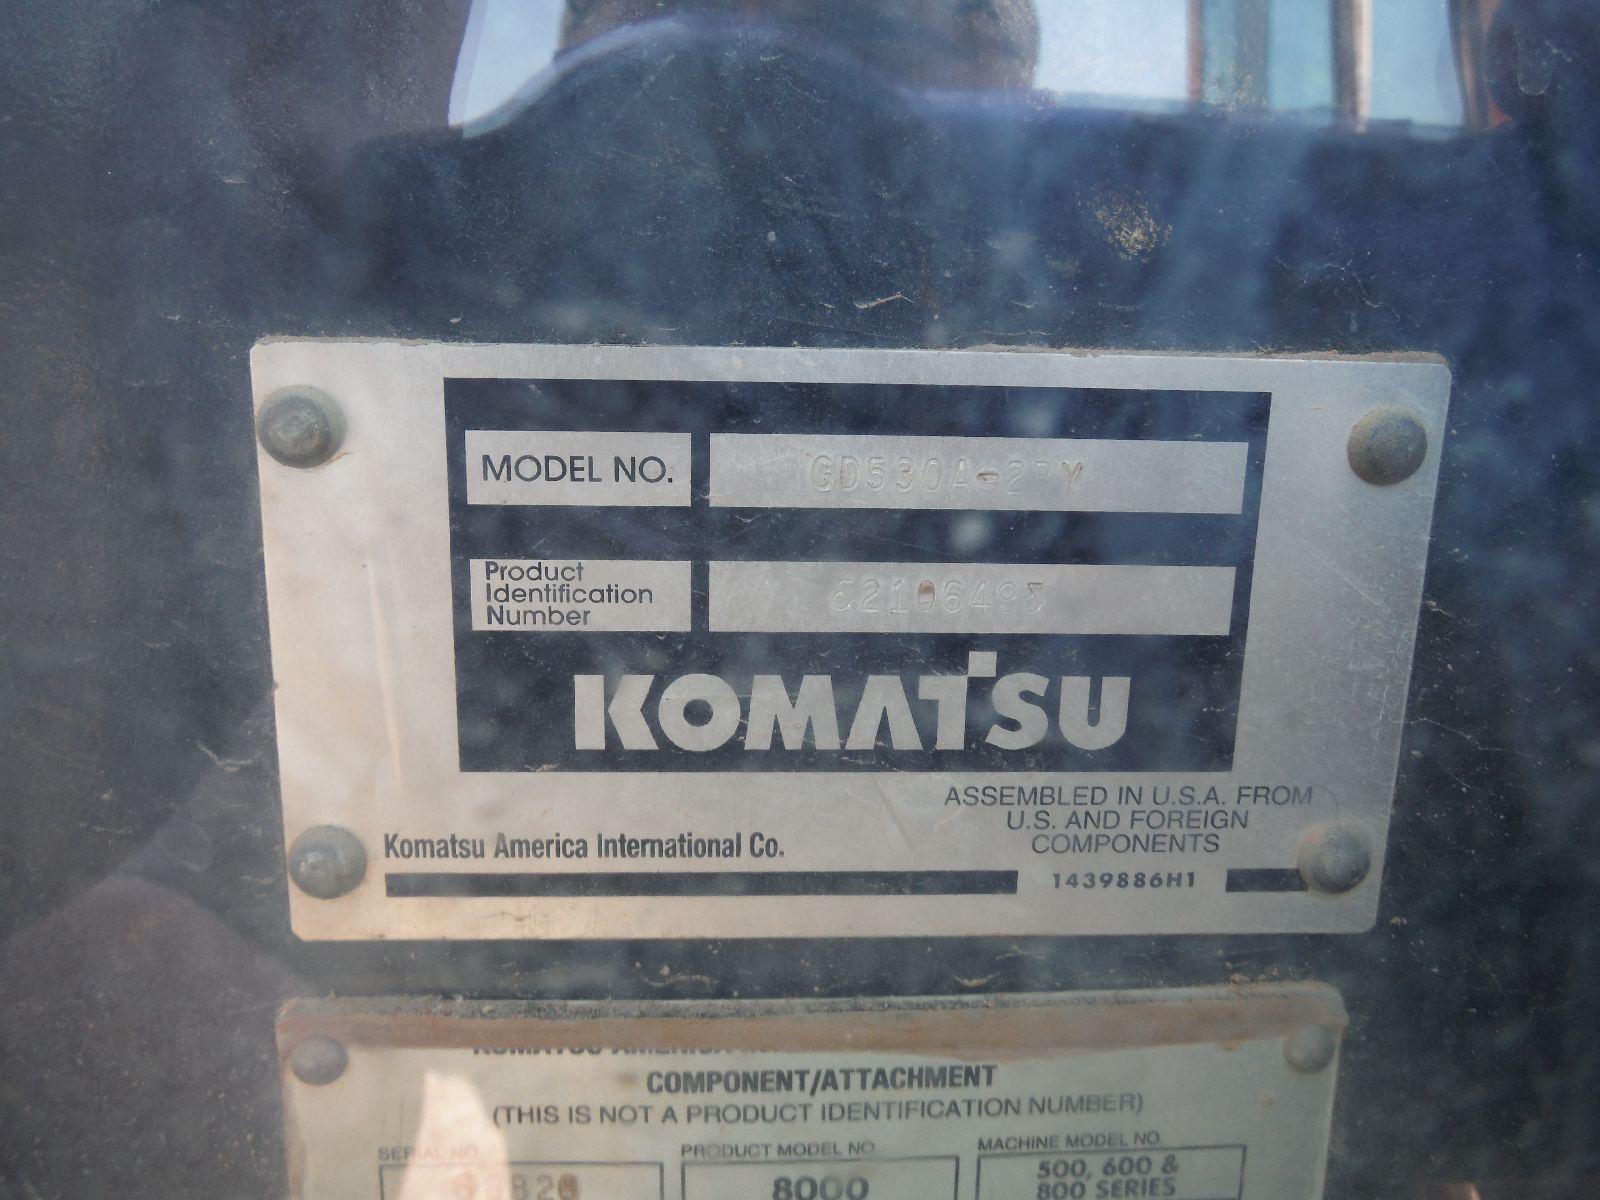 2001 Komatsu GD530A-2BY Motor Grader, s/n 210649: Encl. Cab, Hyd. Side Shif